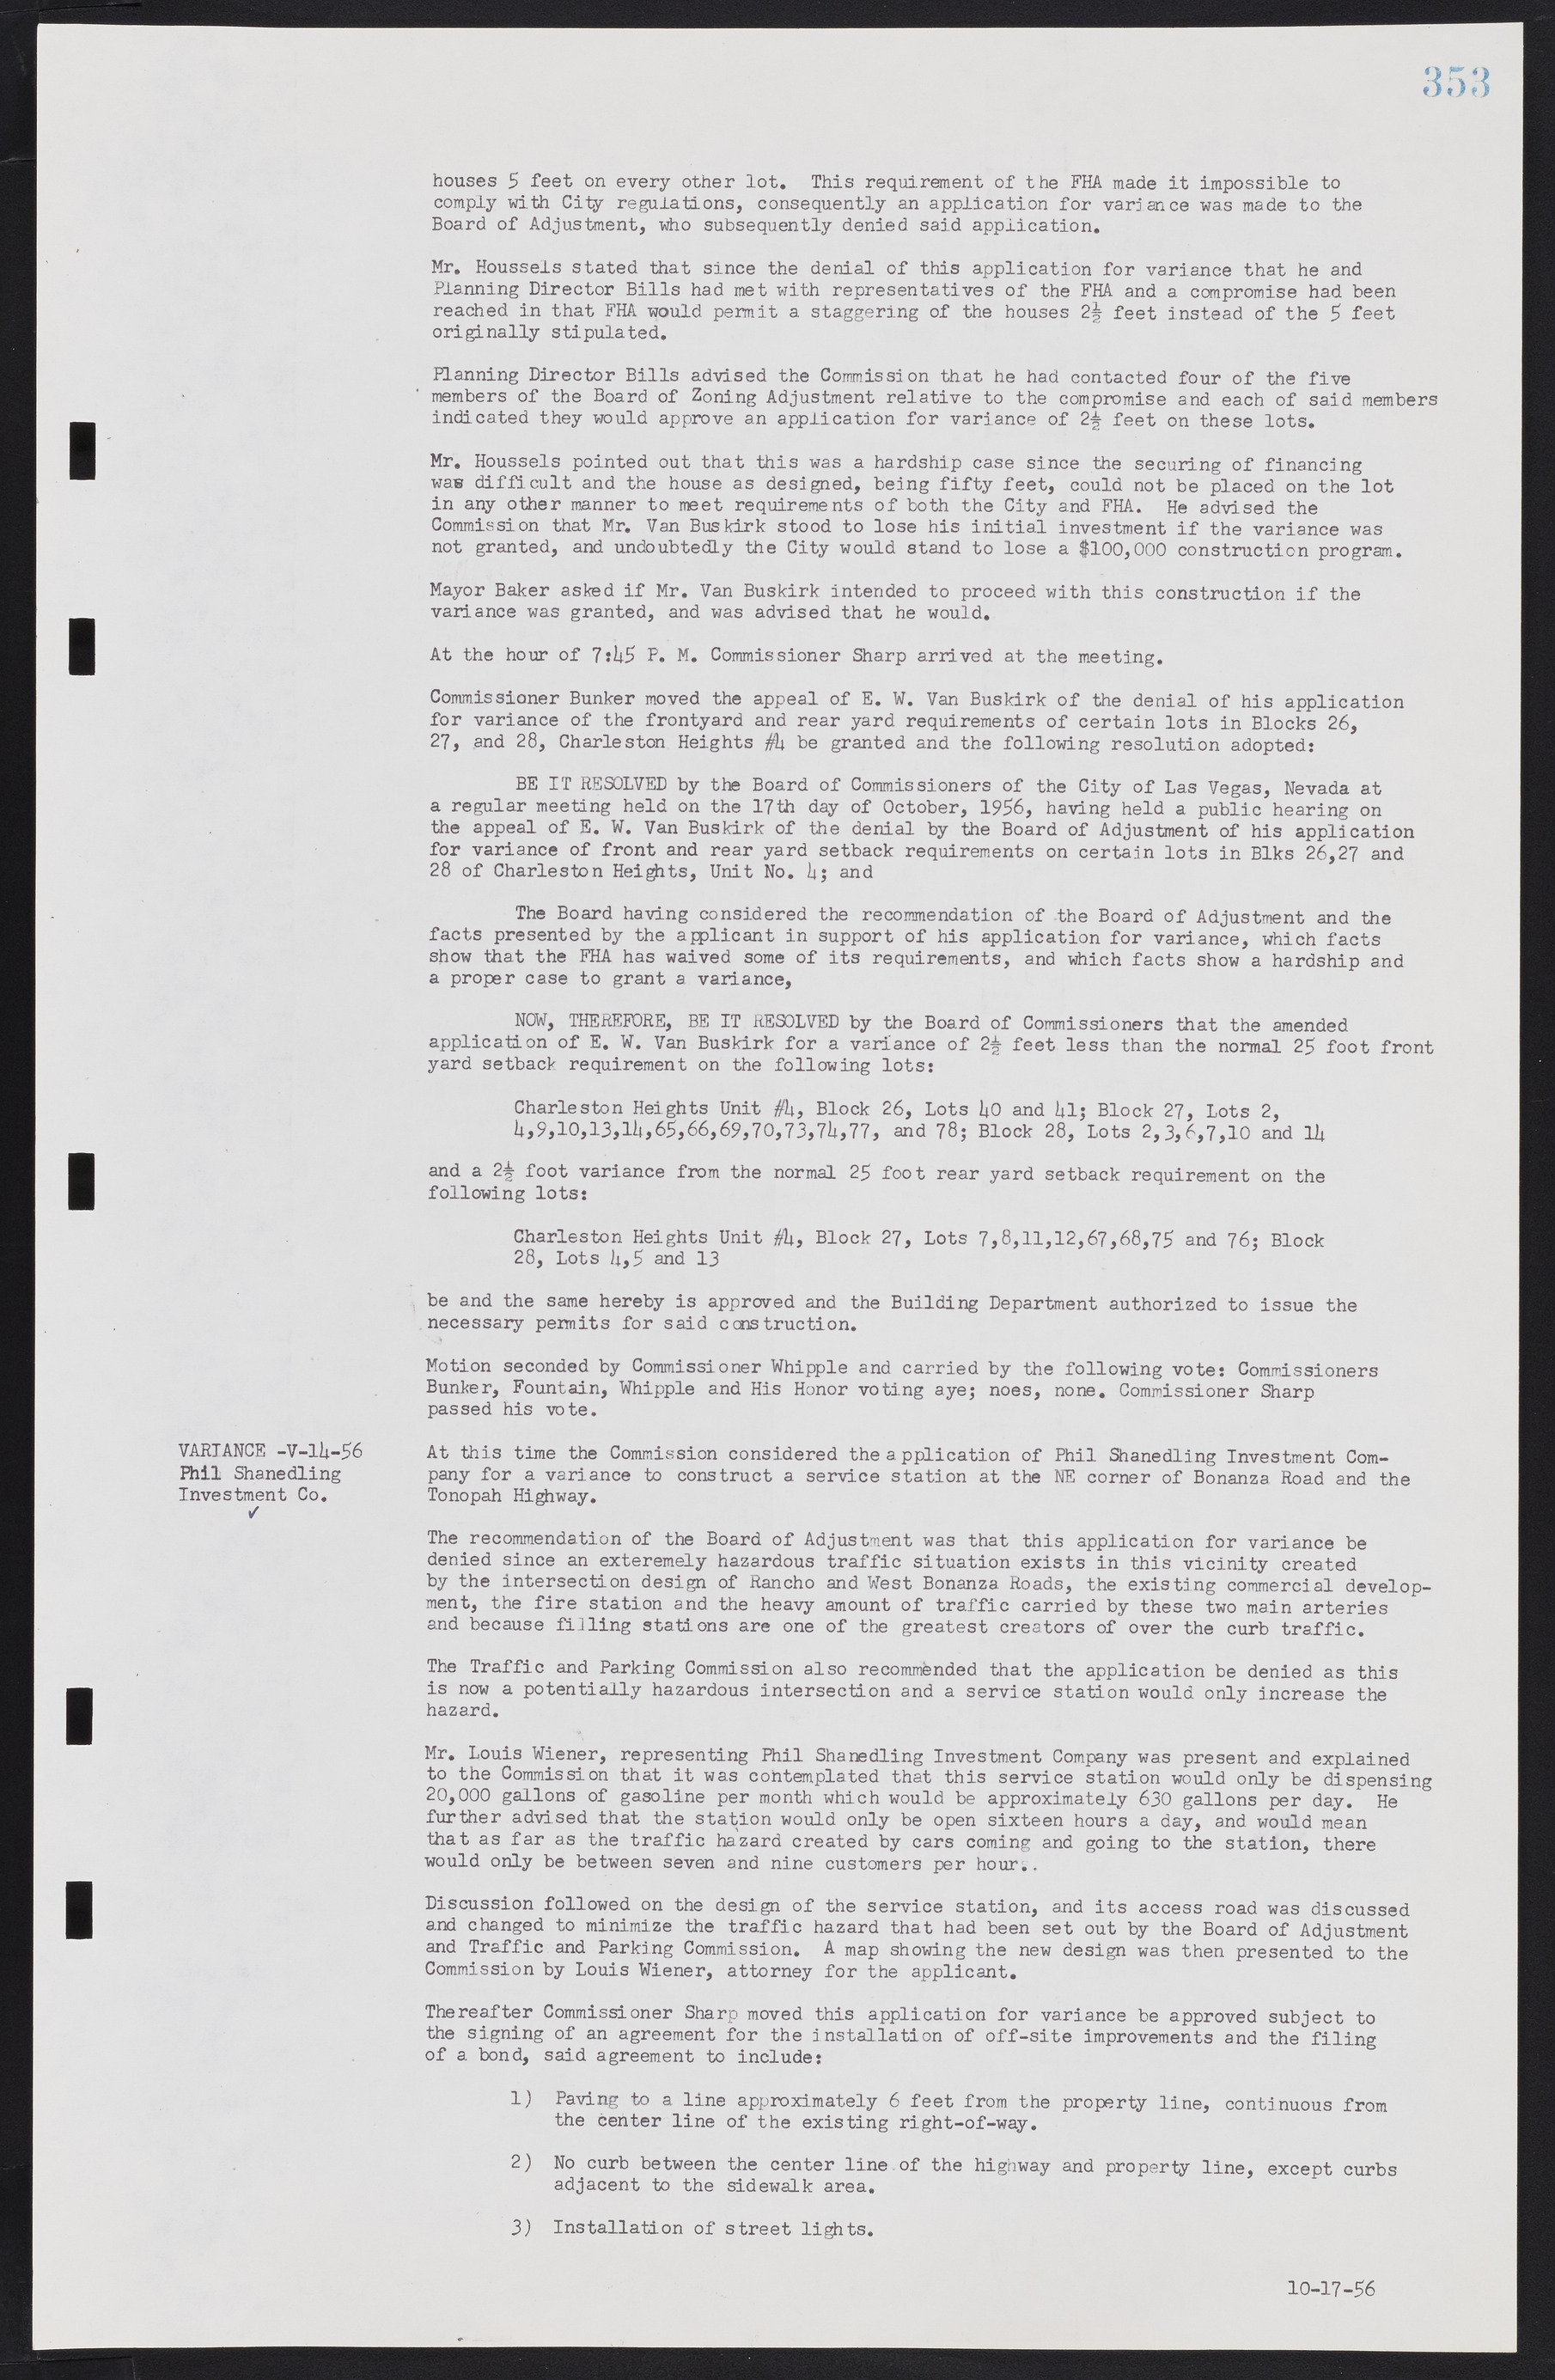 Las Vegas City Commission Minutes, September 21, 1955 to November 20, 1957, lvc000010-373